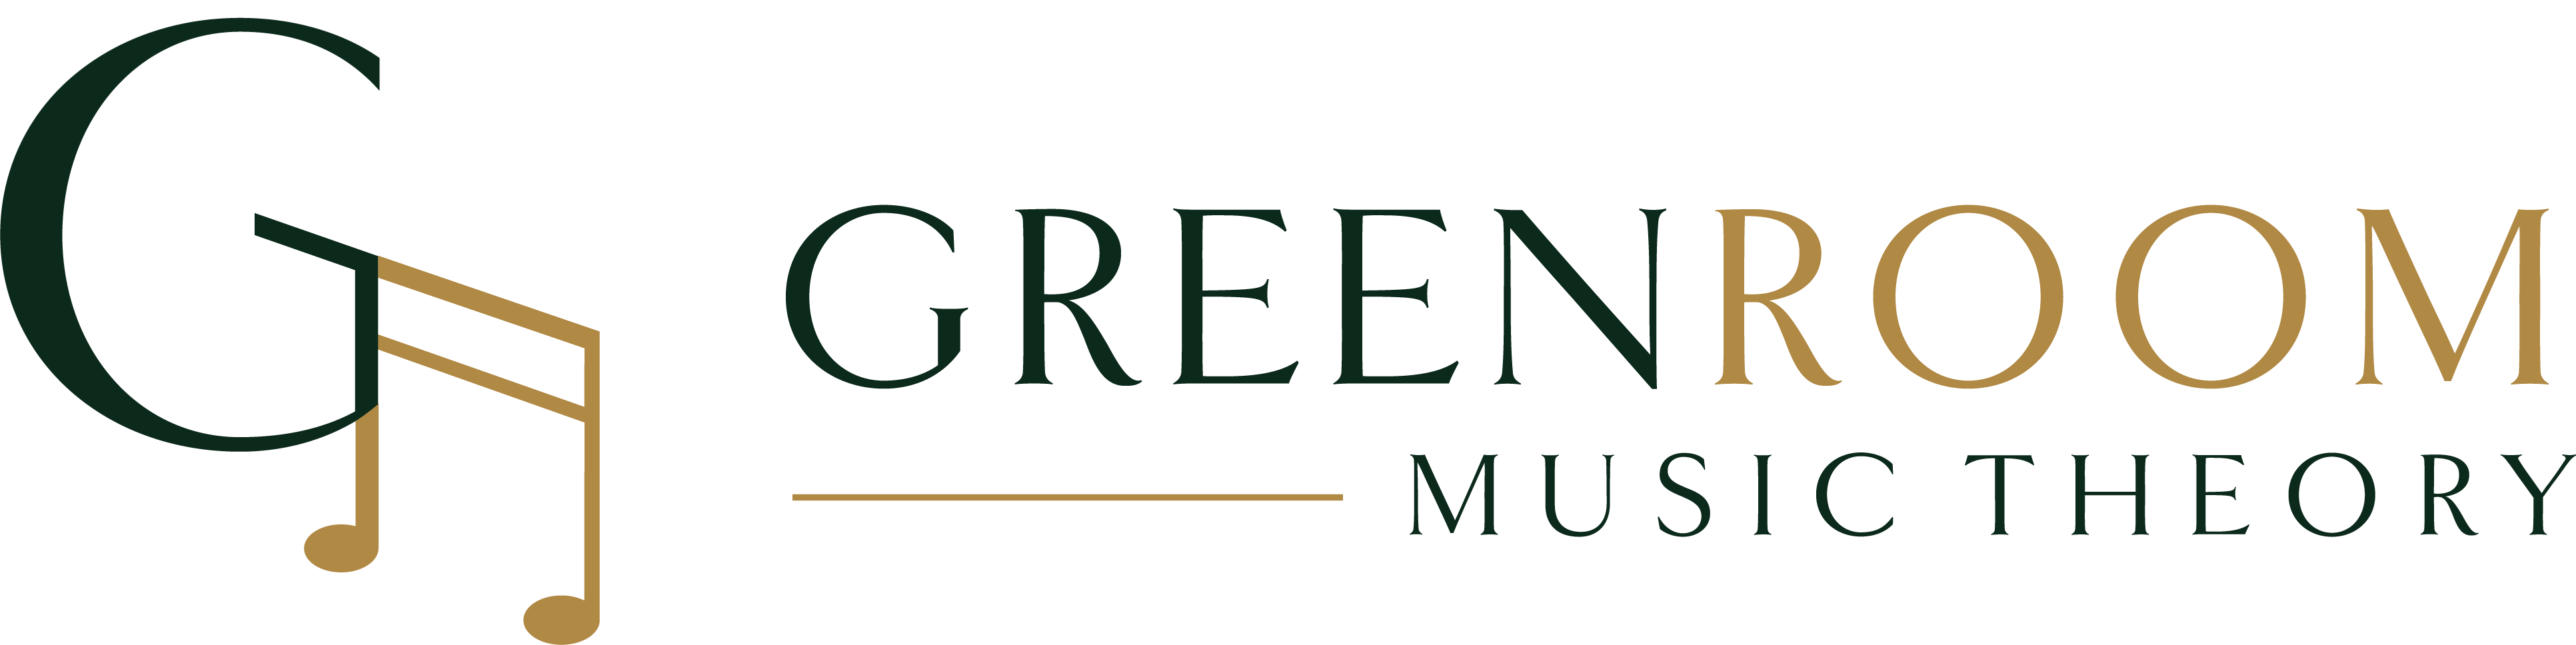 green room music theory logo